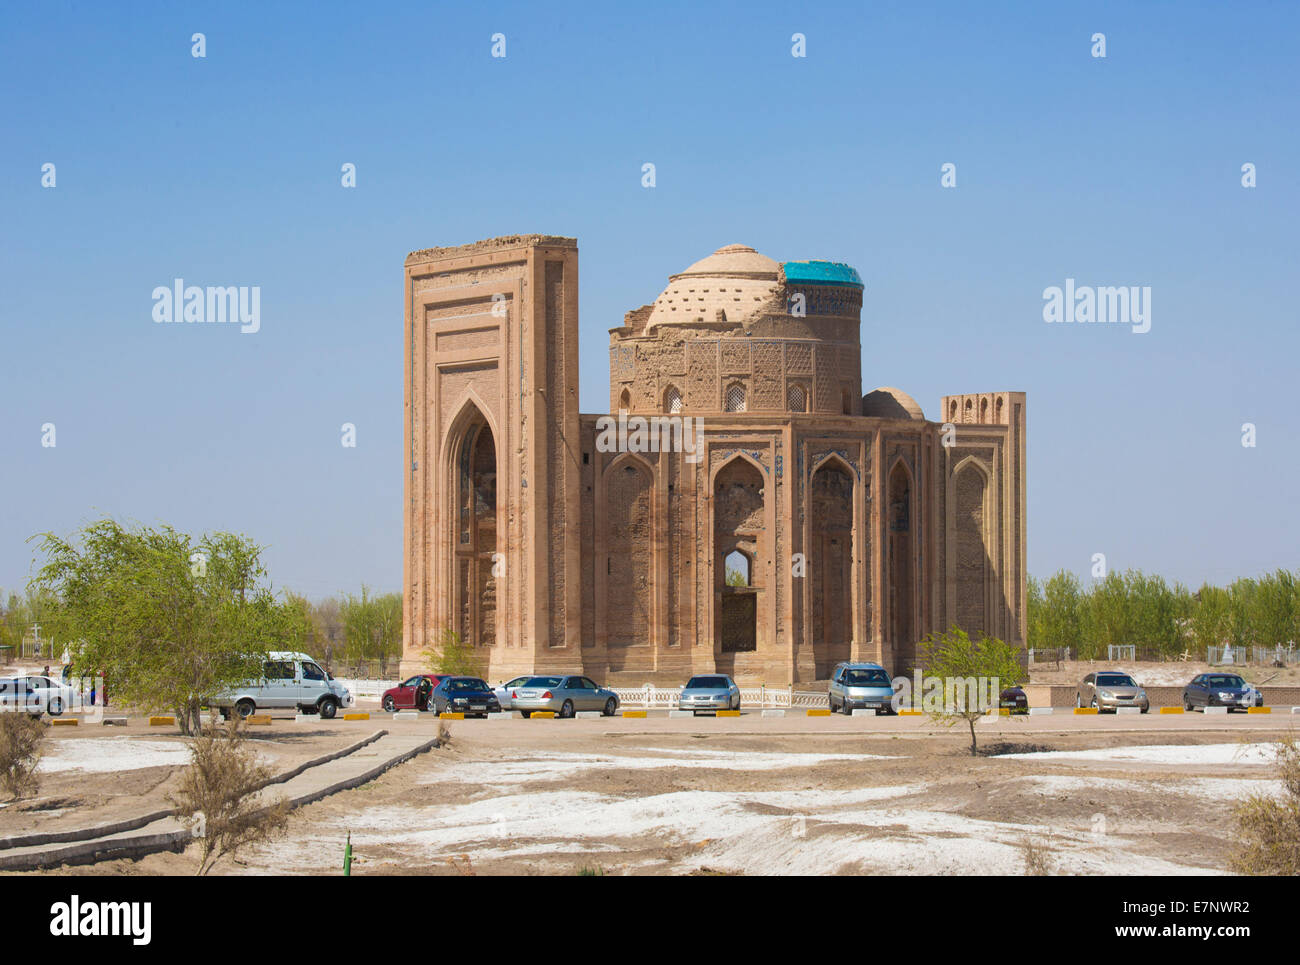 Eredità di Mondo, Konye Urgench, Mausoleo, Torebeg Hanym, Turkmenistan, Asia Centrale, Asia, archeologici, architettura, storia Foto Stock